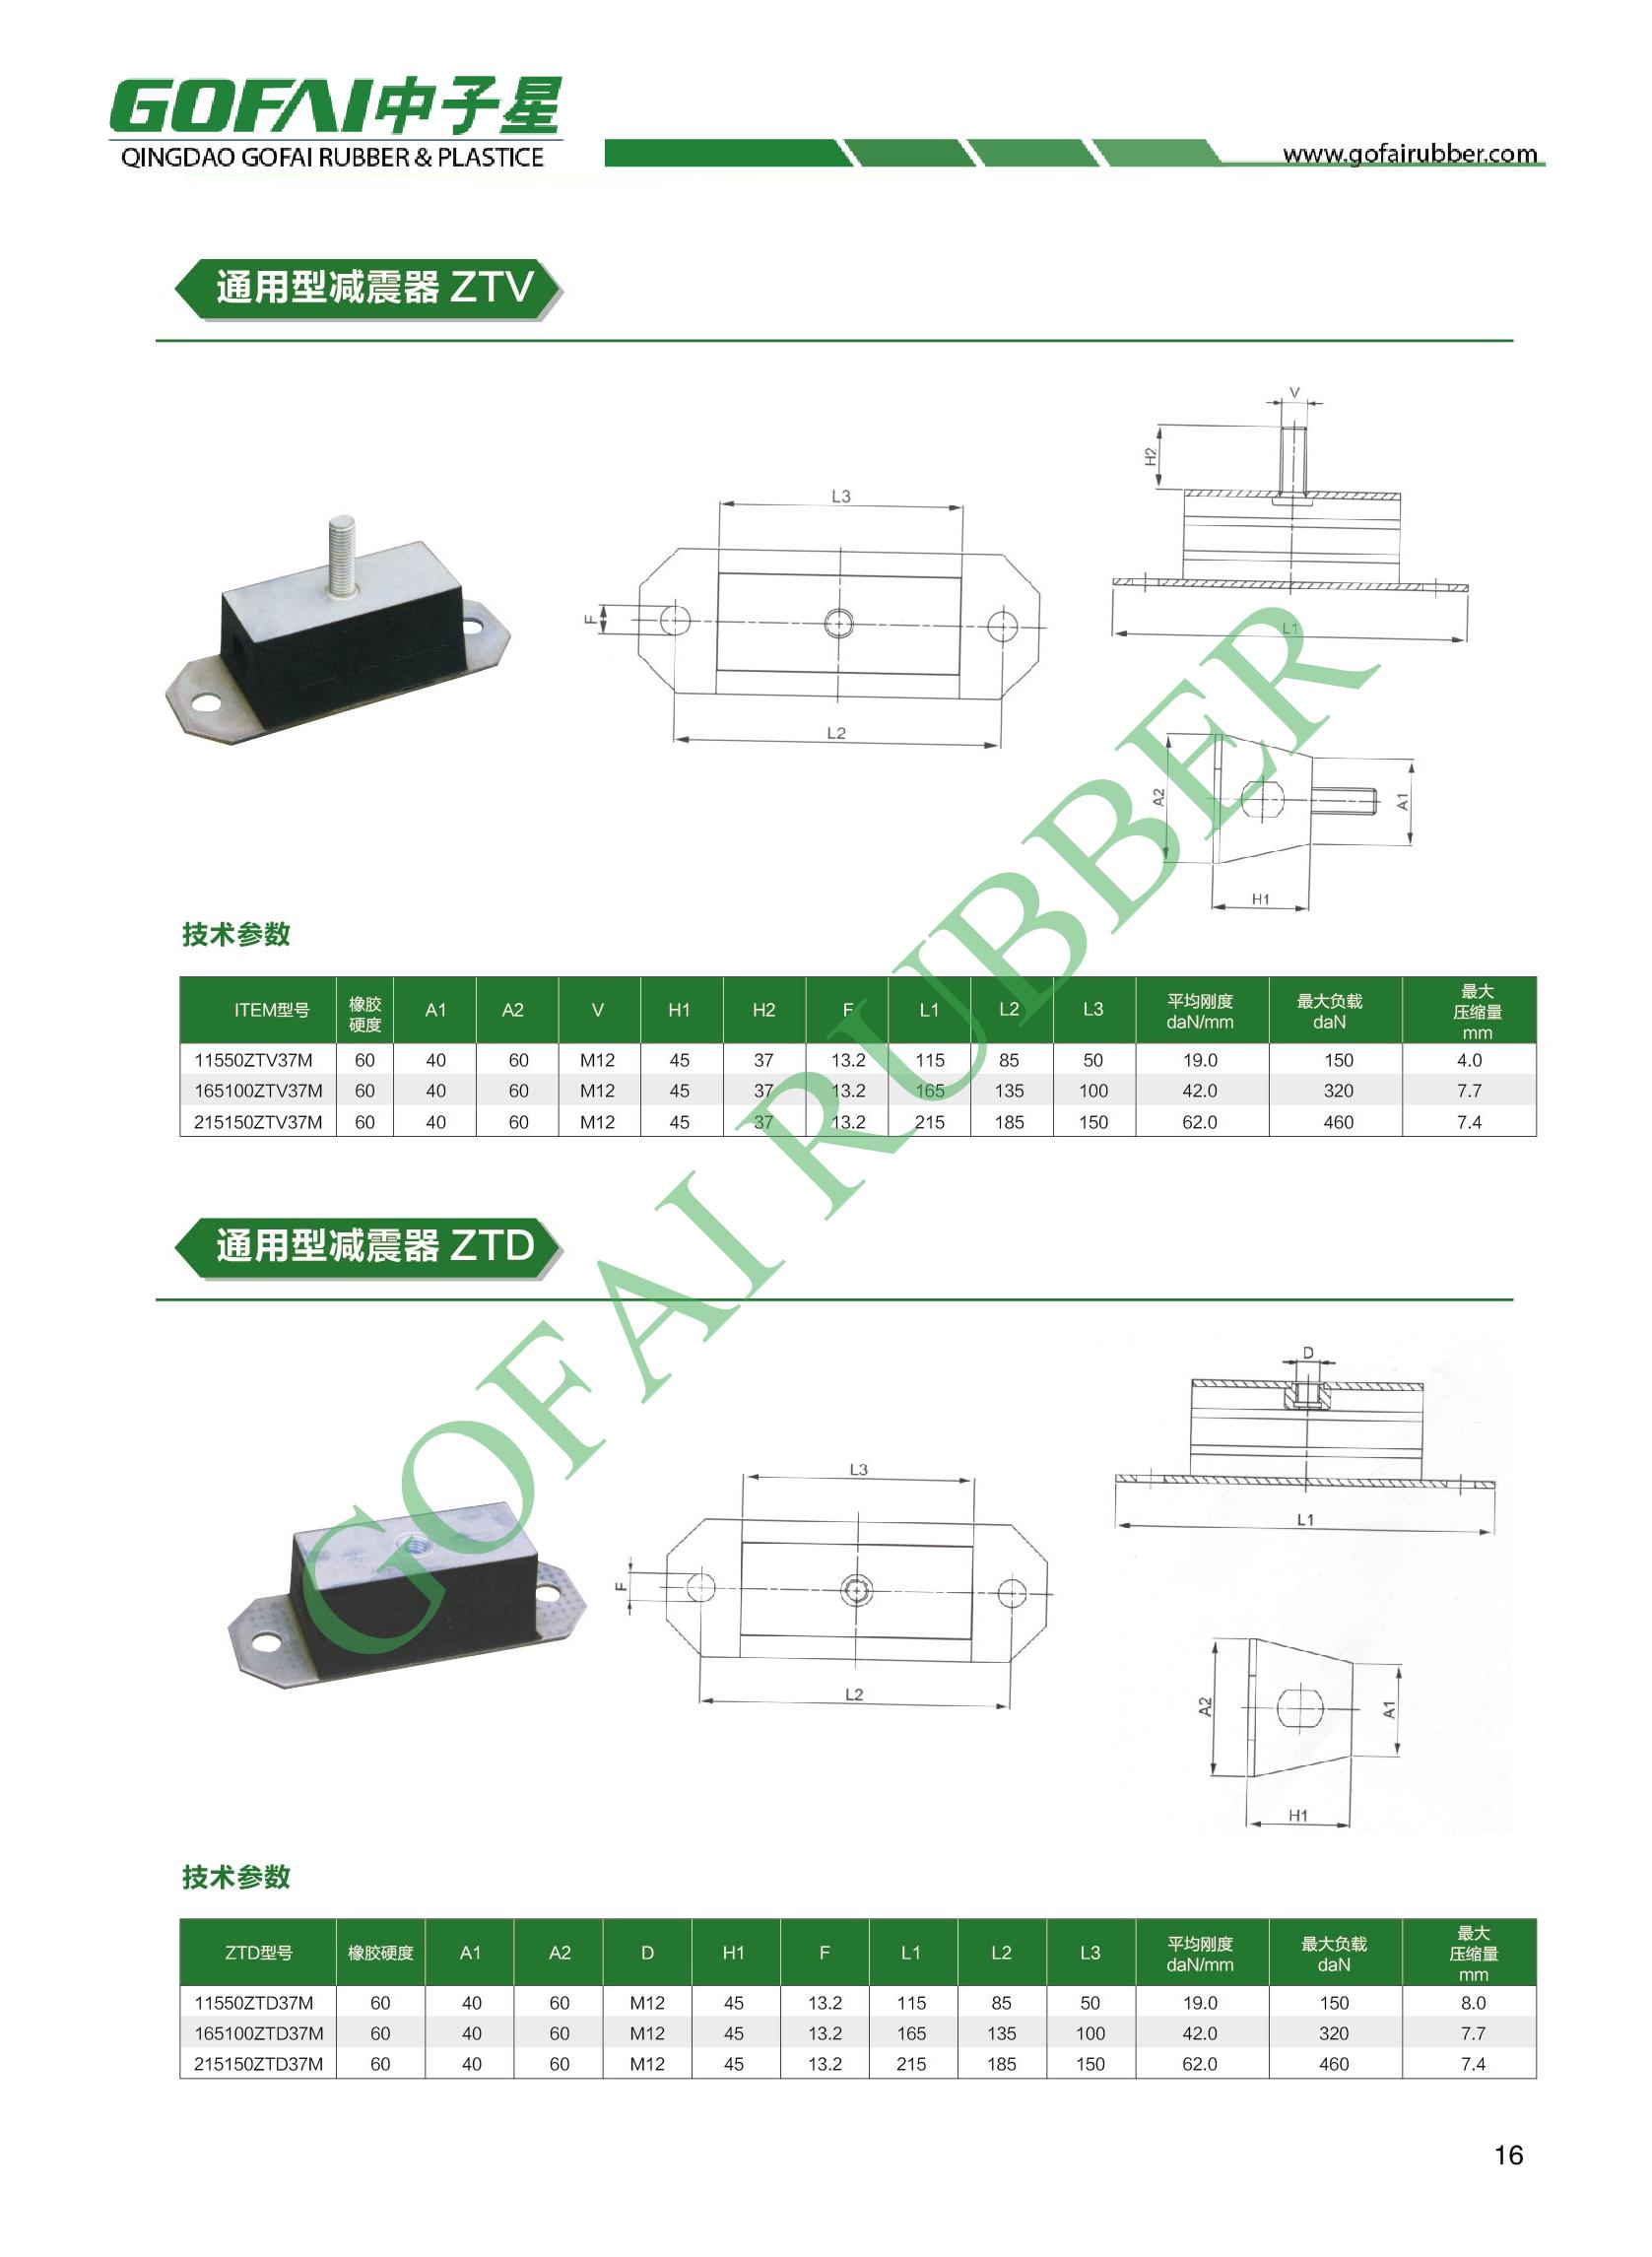 GOFAI catalog for rubber anti-vibration mounts_14.jpg